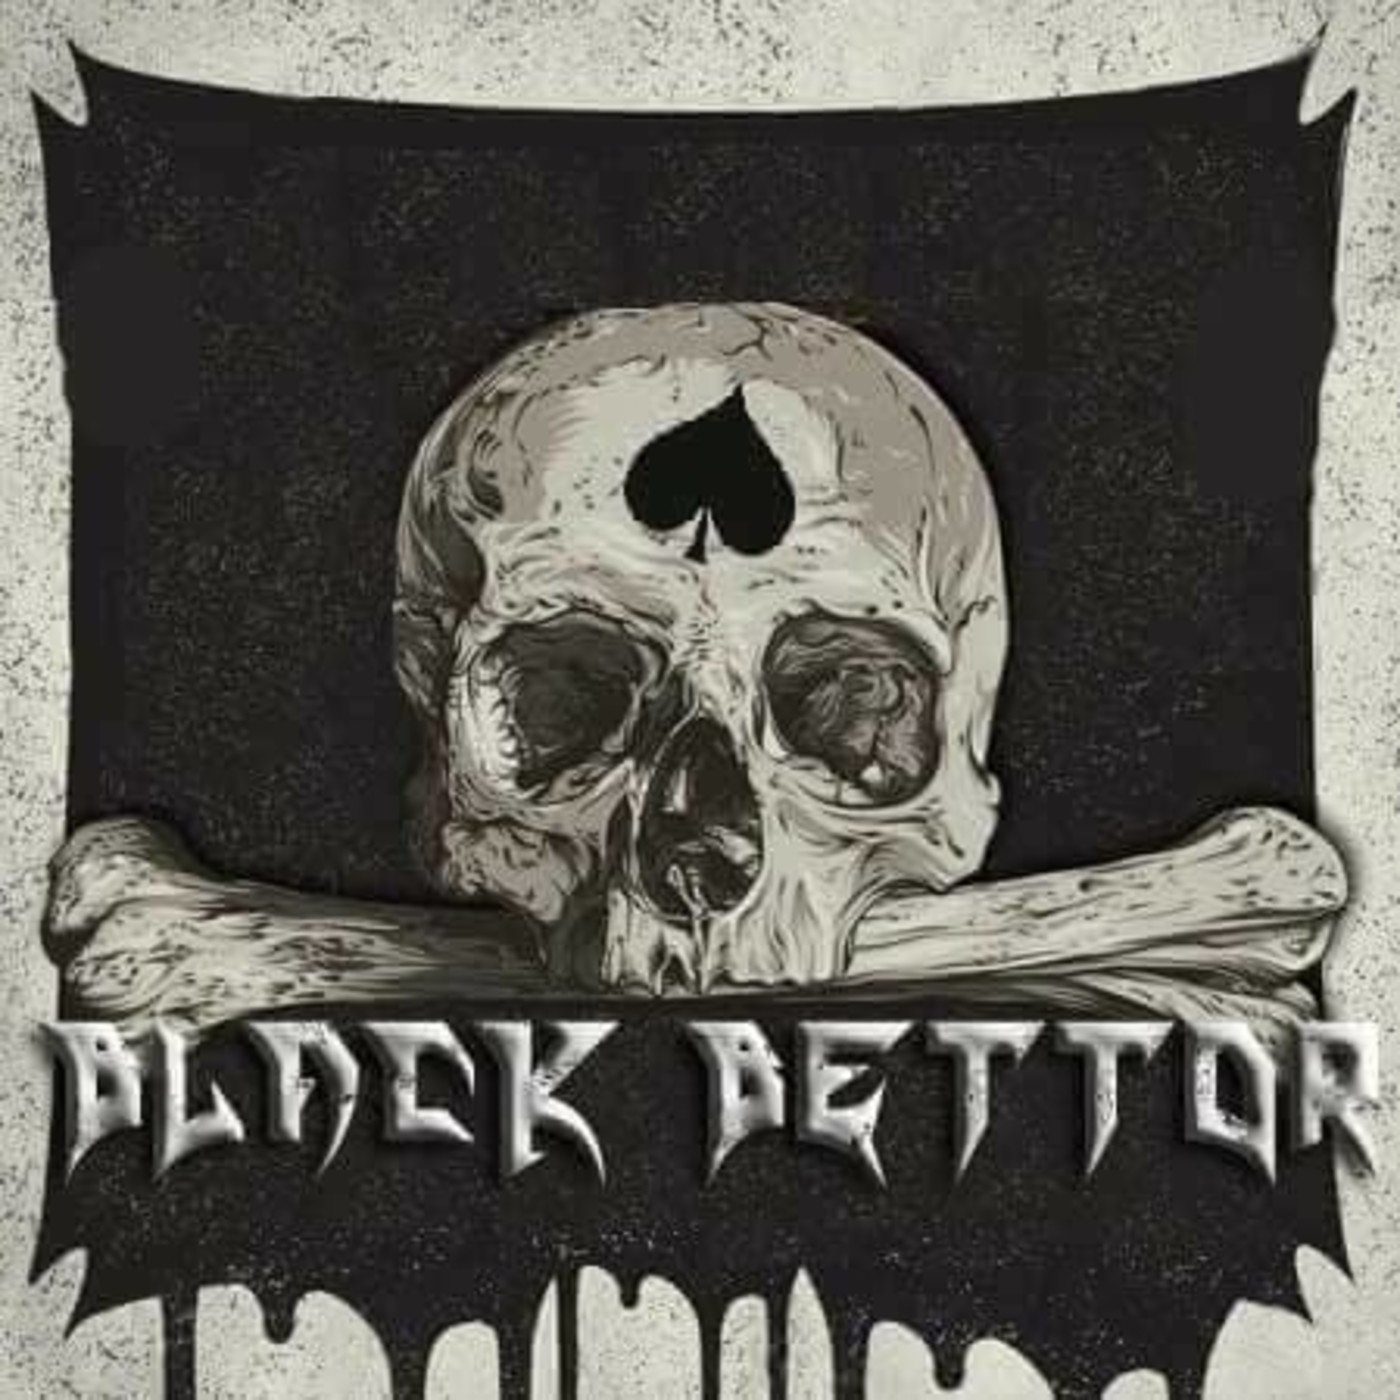 Black Bettor Band "EP 2018"